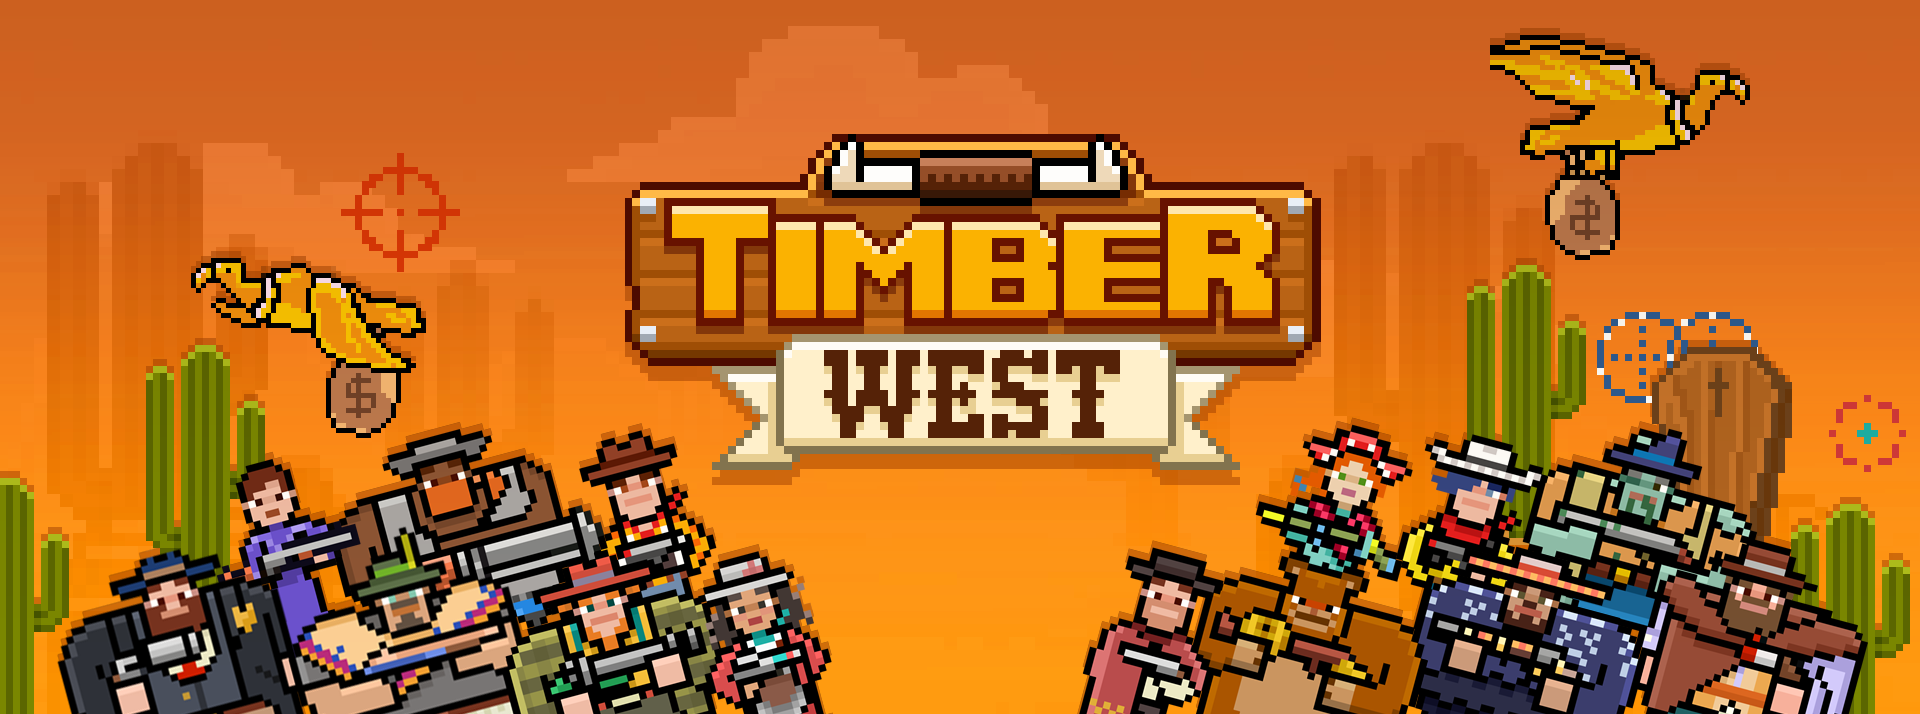 Banner of Timber West - นักกีฬาอาเขต Wild West 